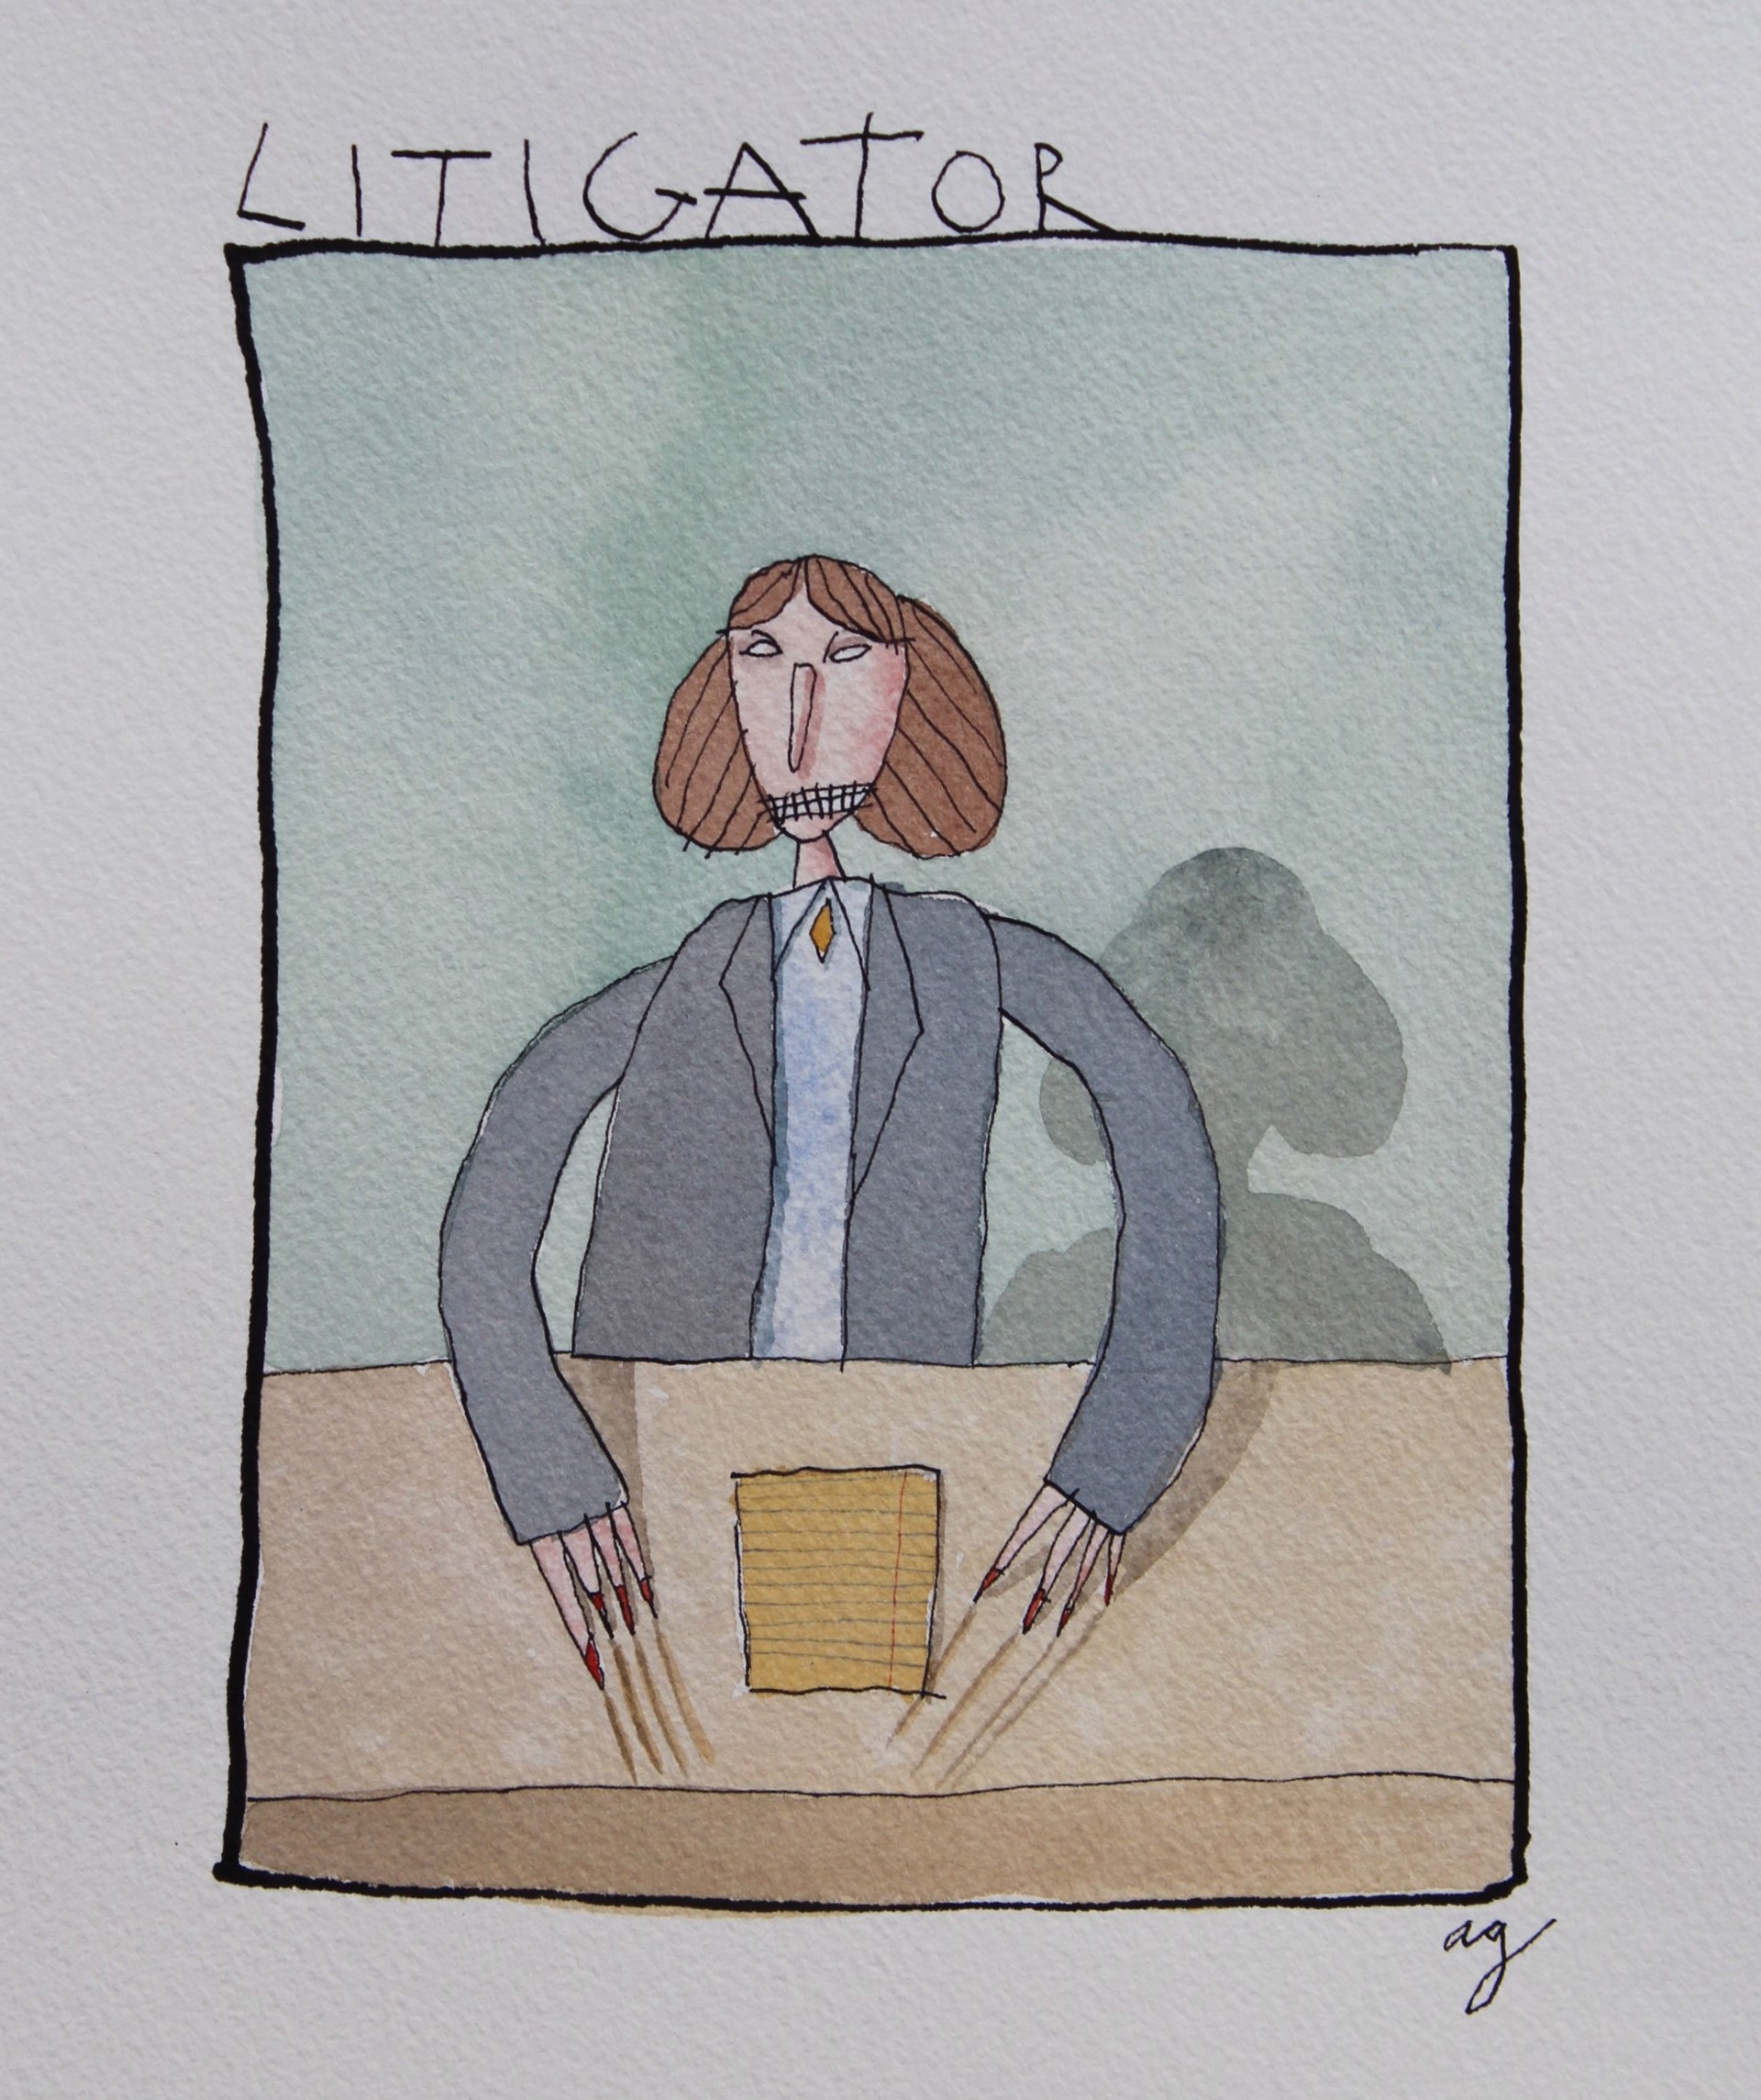 Litigator by Alan Gerson